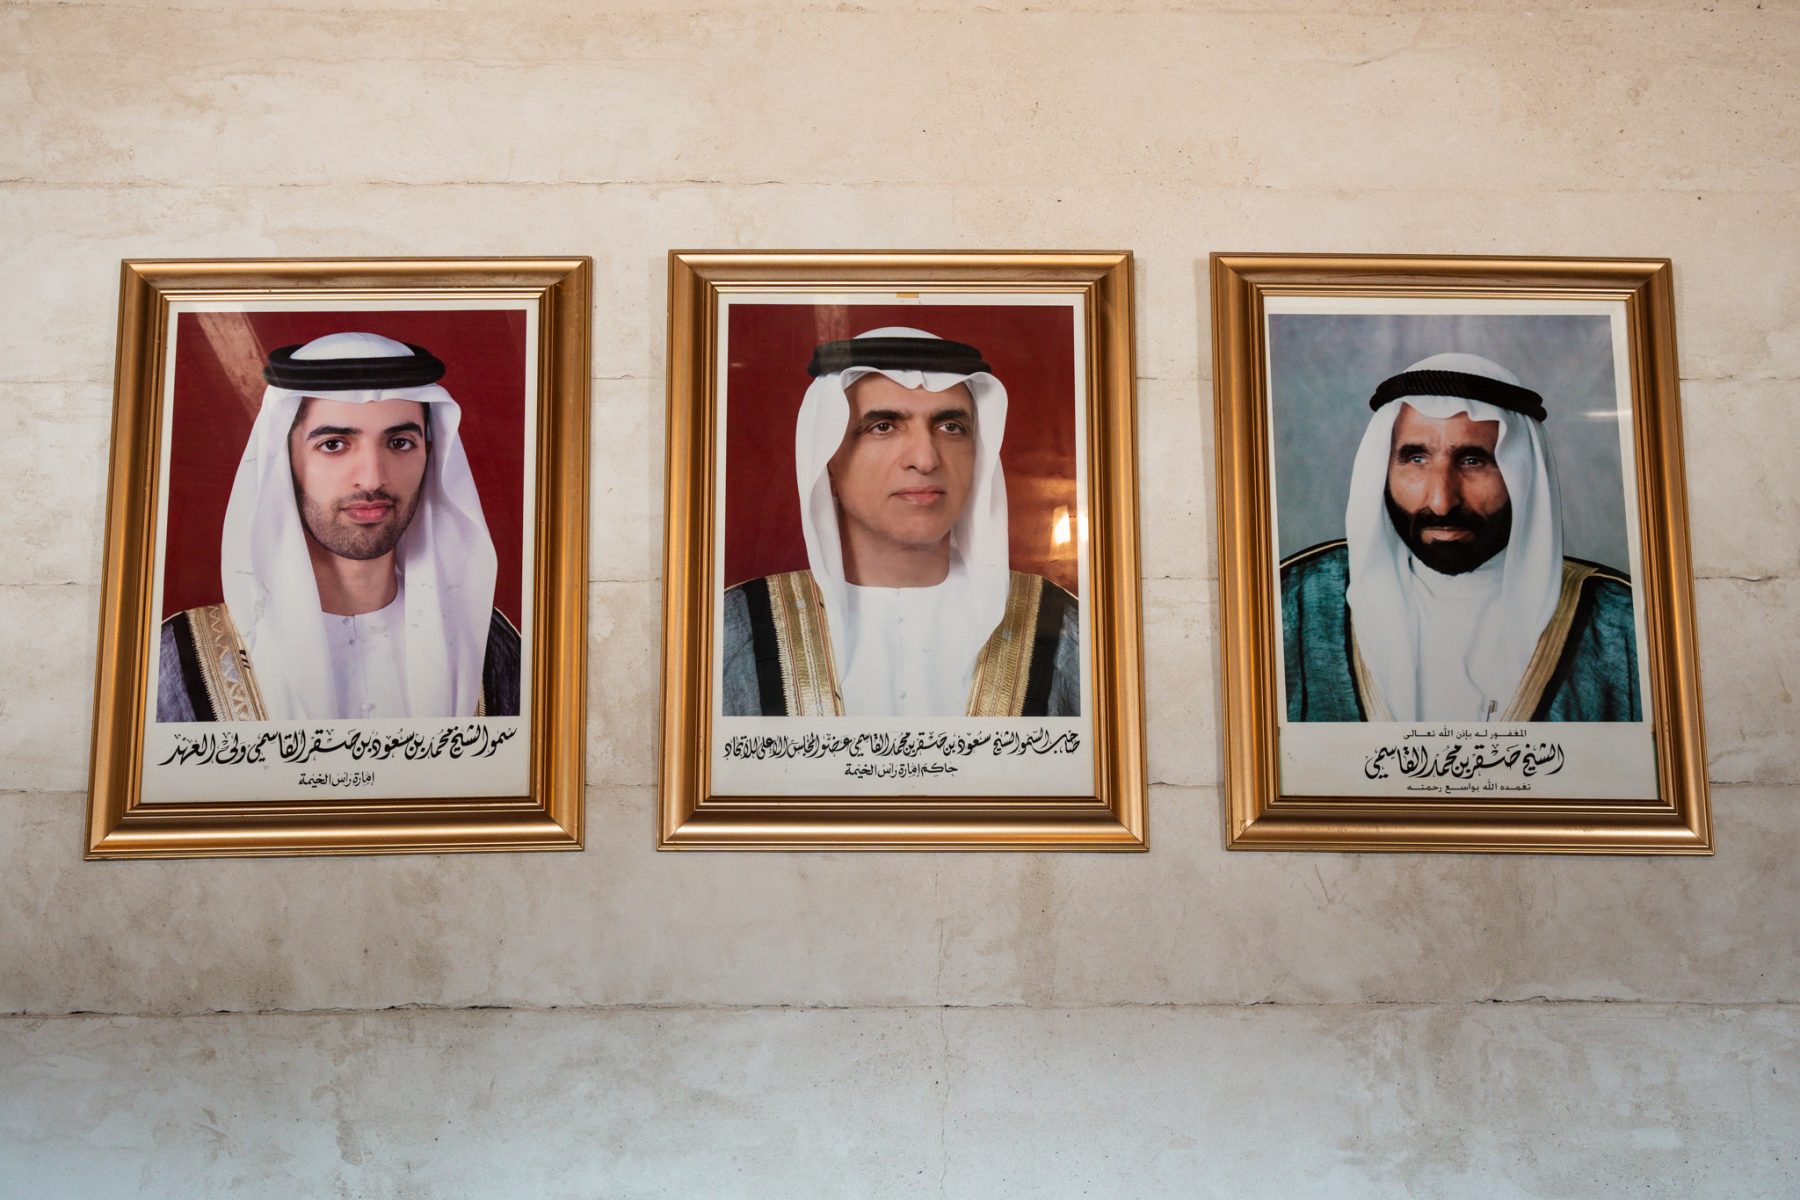 Ras al Khaimah wordt bestuurd door Sheikh Saud bin Saqr Al Qasimi